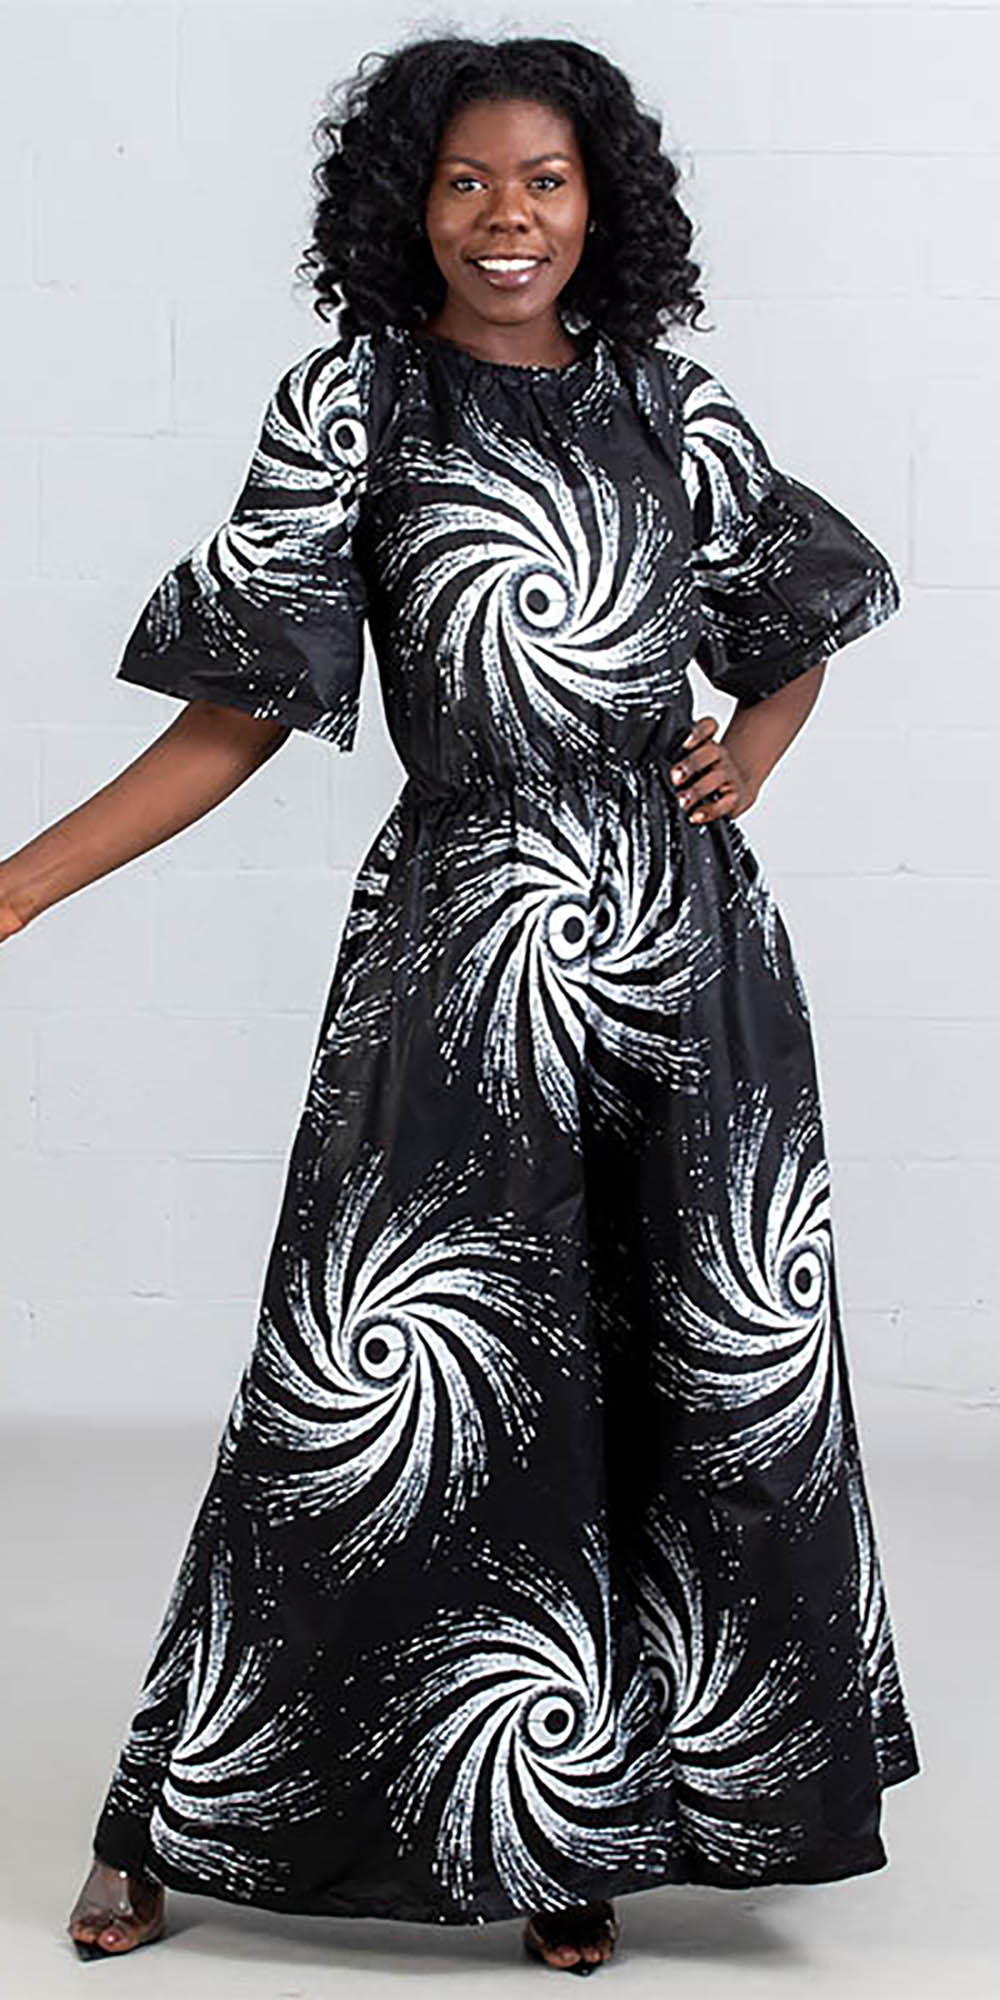 KaraChic 7209-443 - Black White Swirl Print Flare Sleeve Jumpsuit